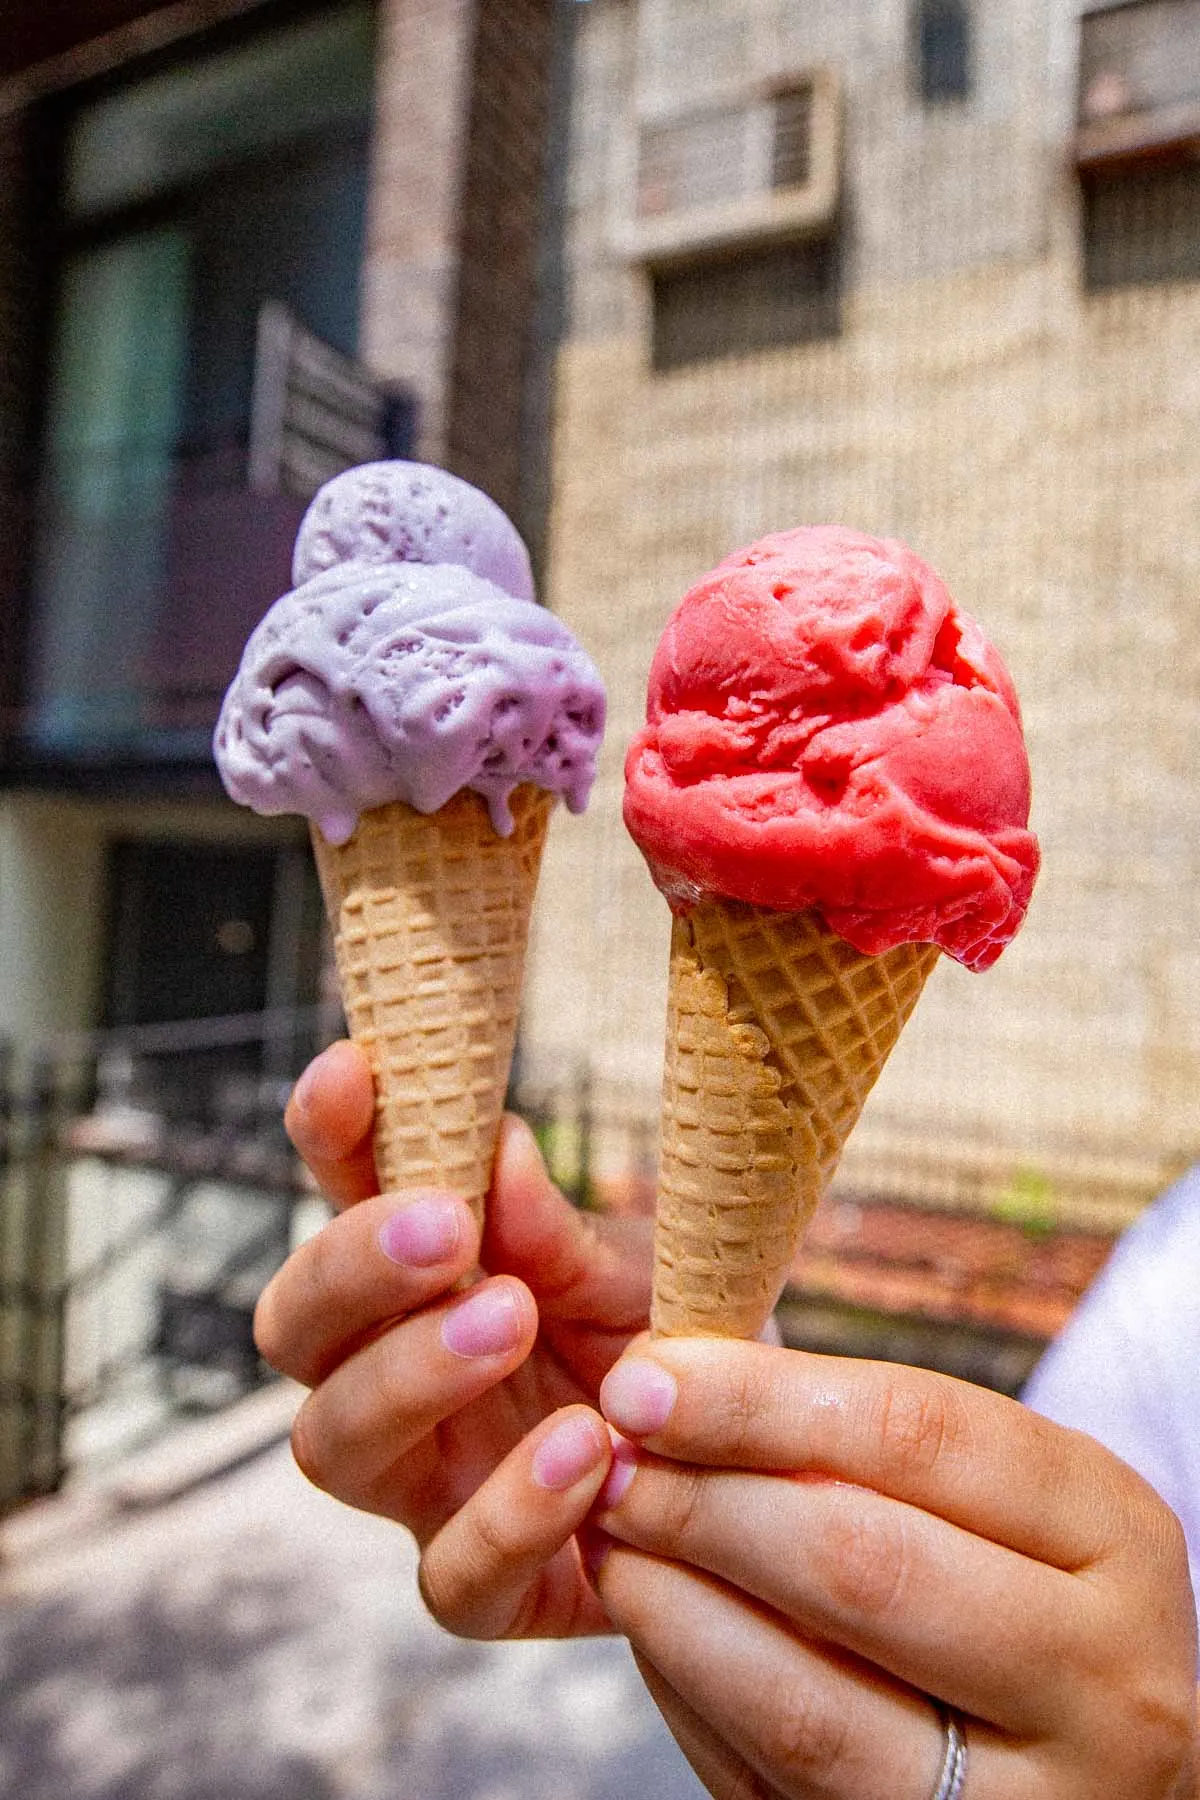 New York City Best Ice Cream
August in NYC